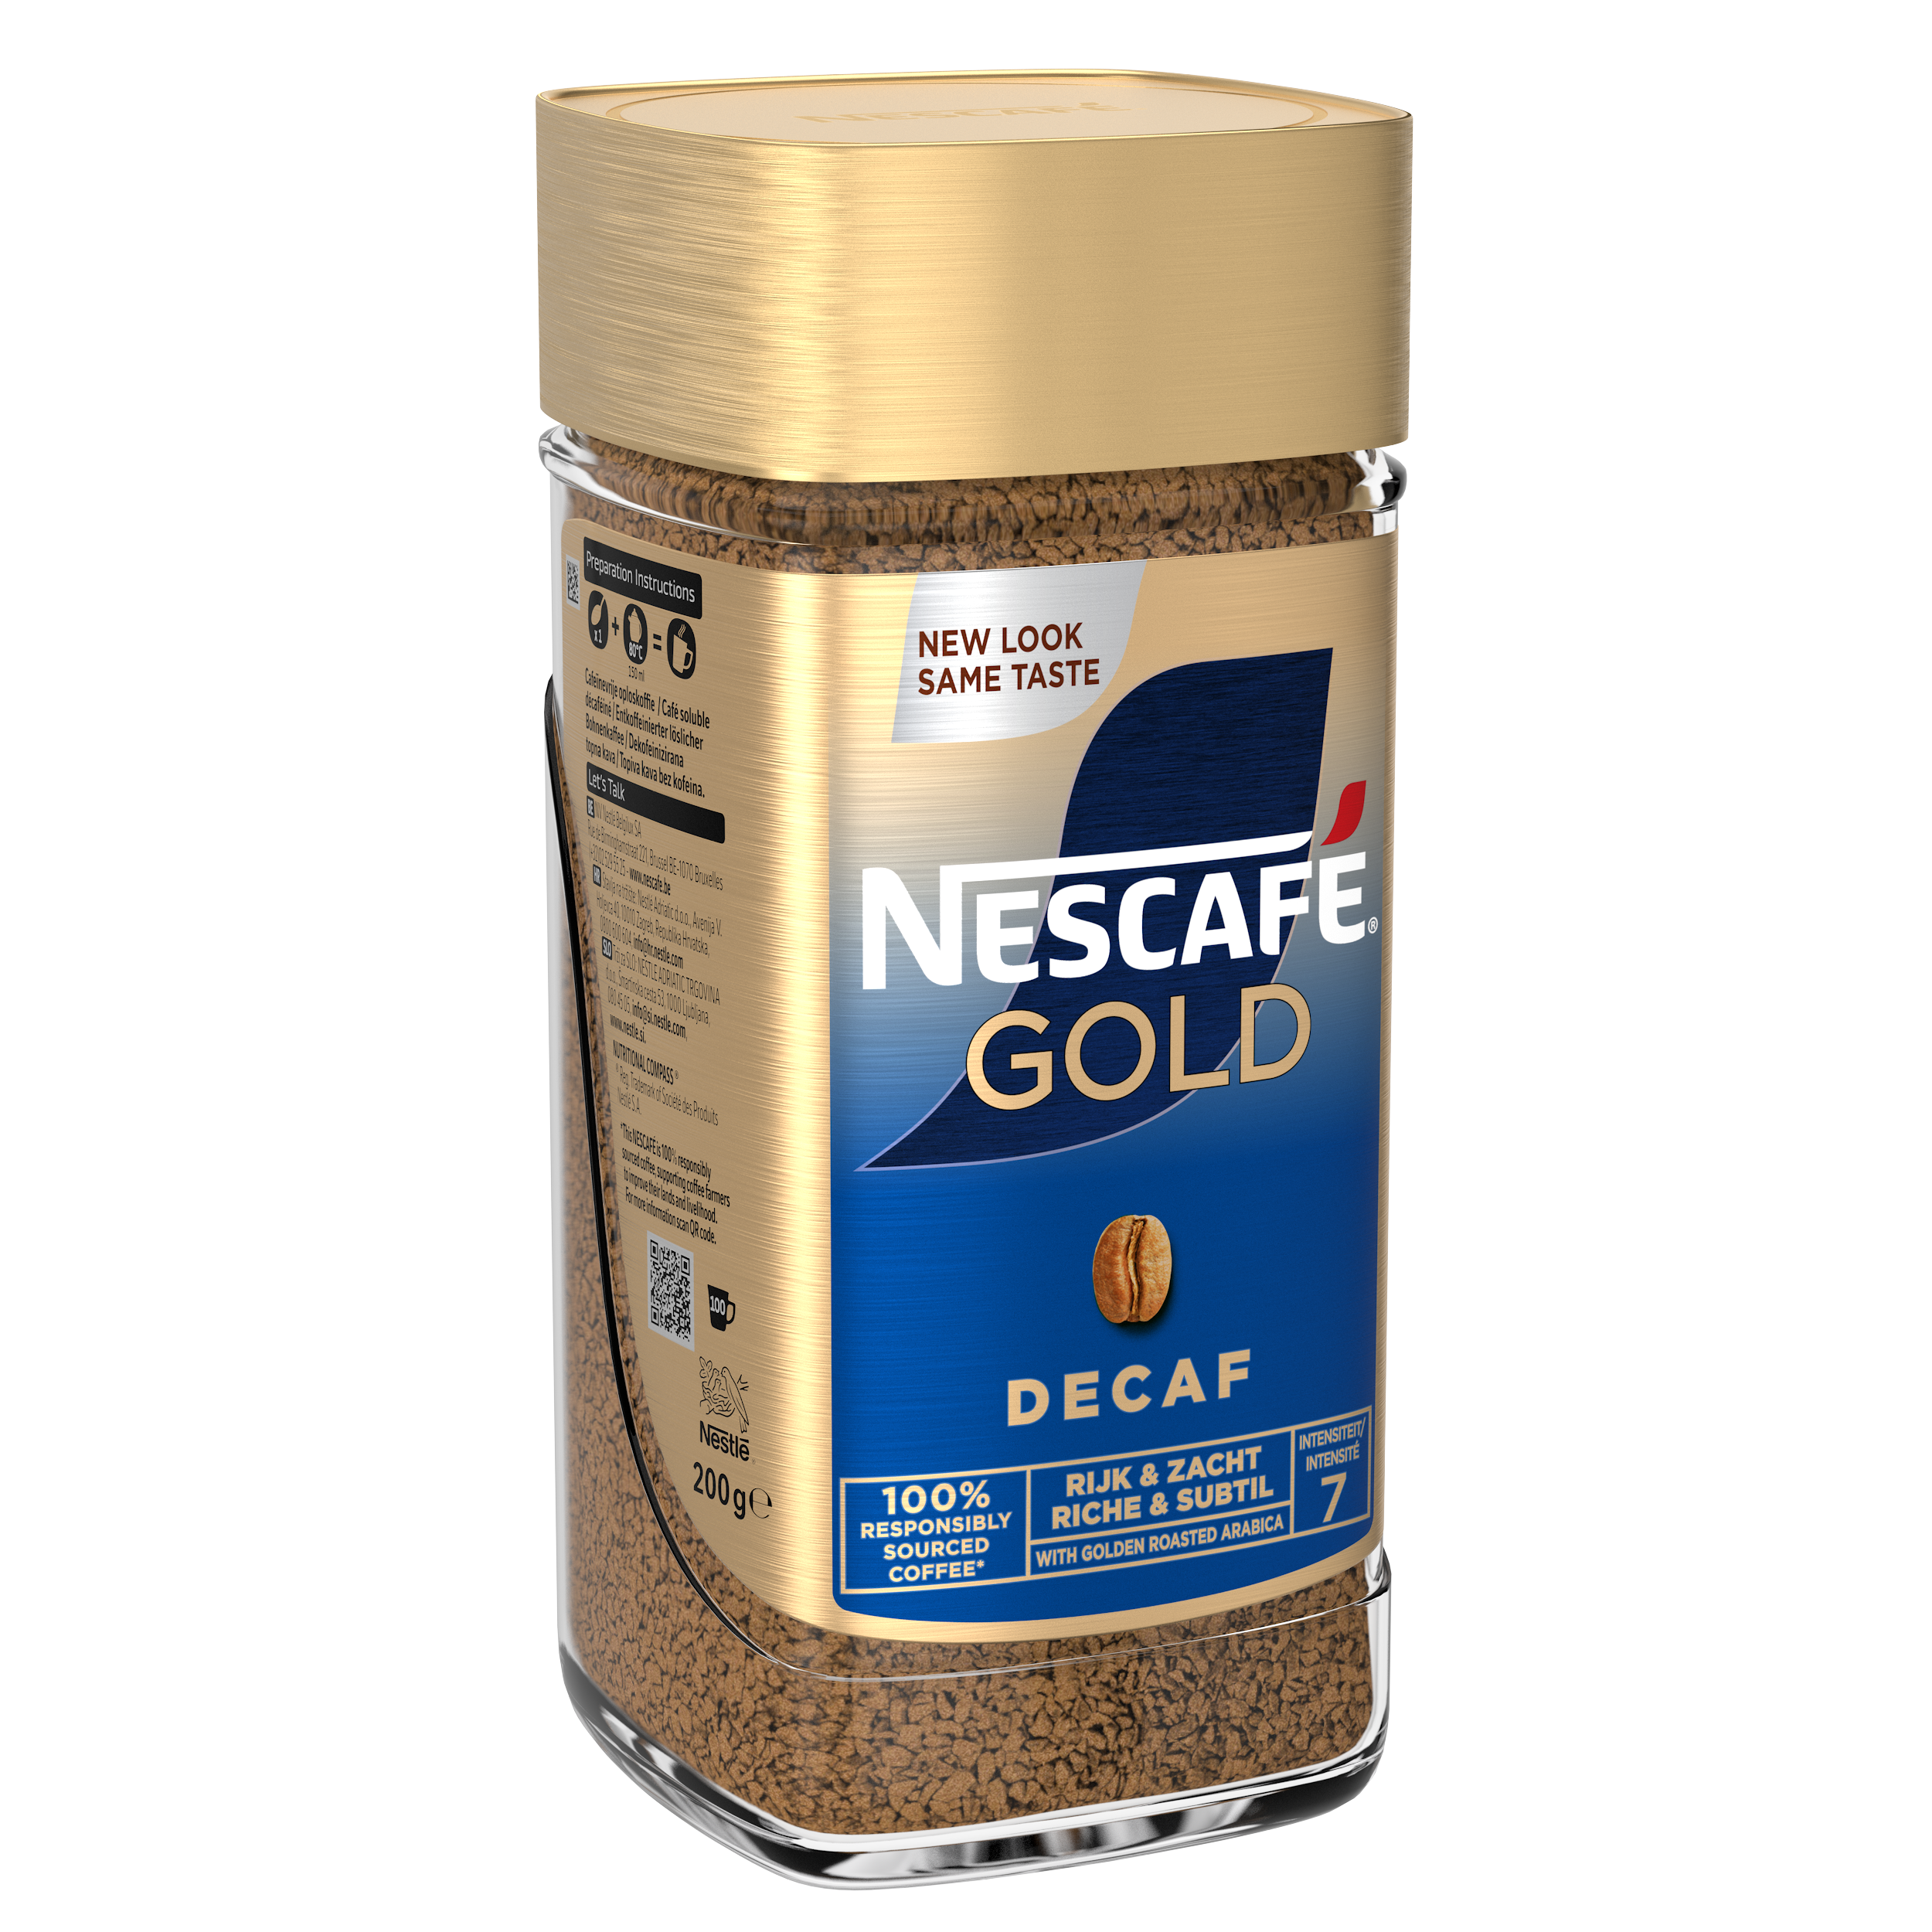 Nescafé gold decaf coffee